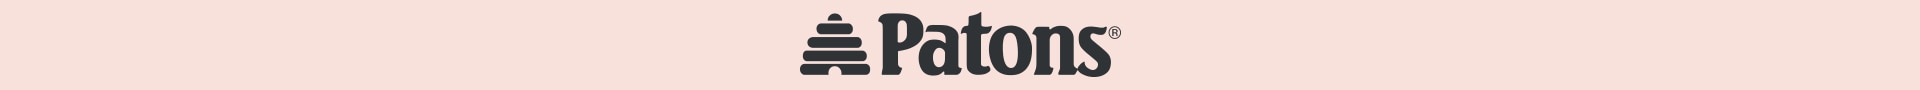 Patons yarn logo image